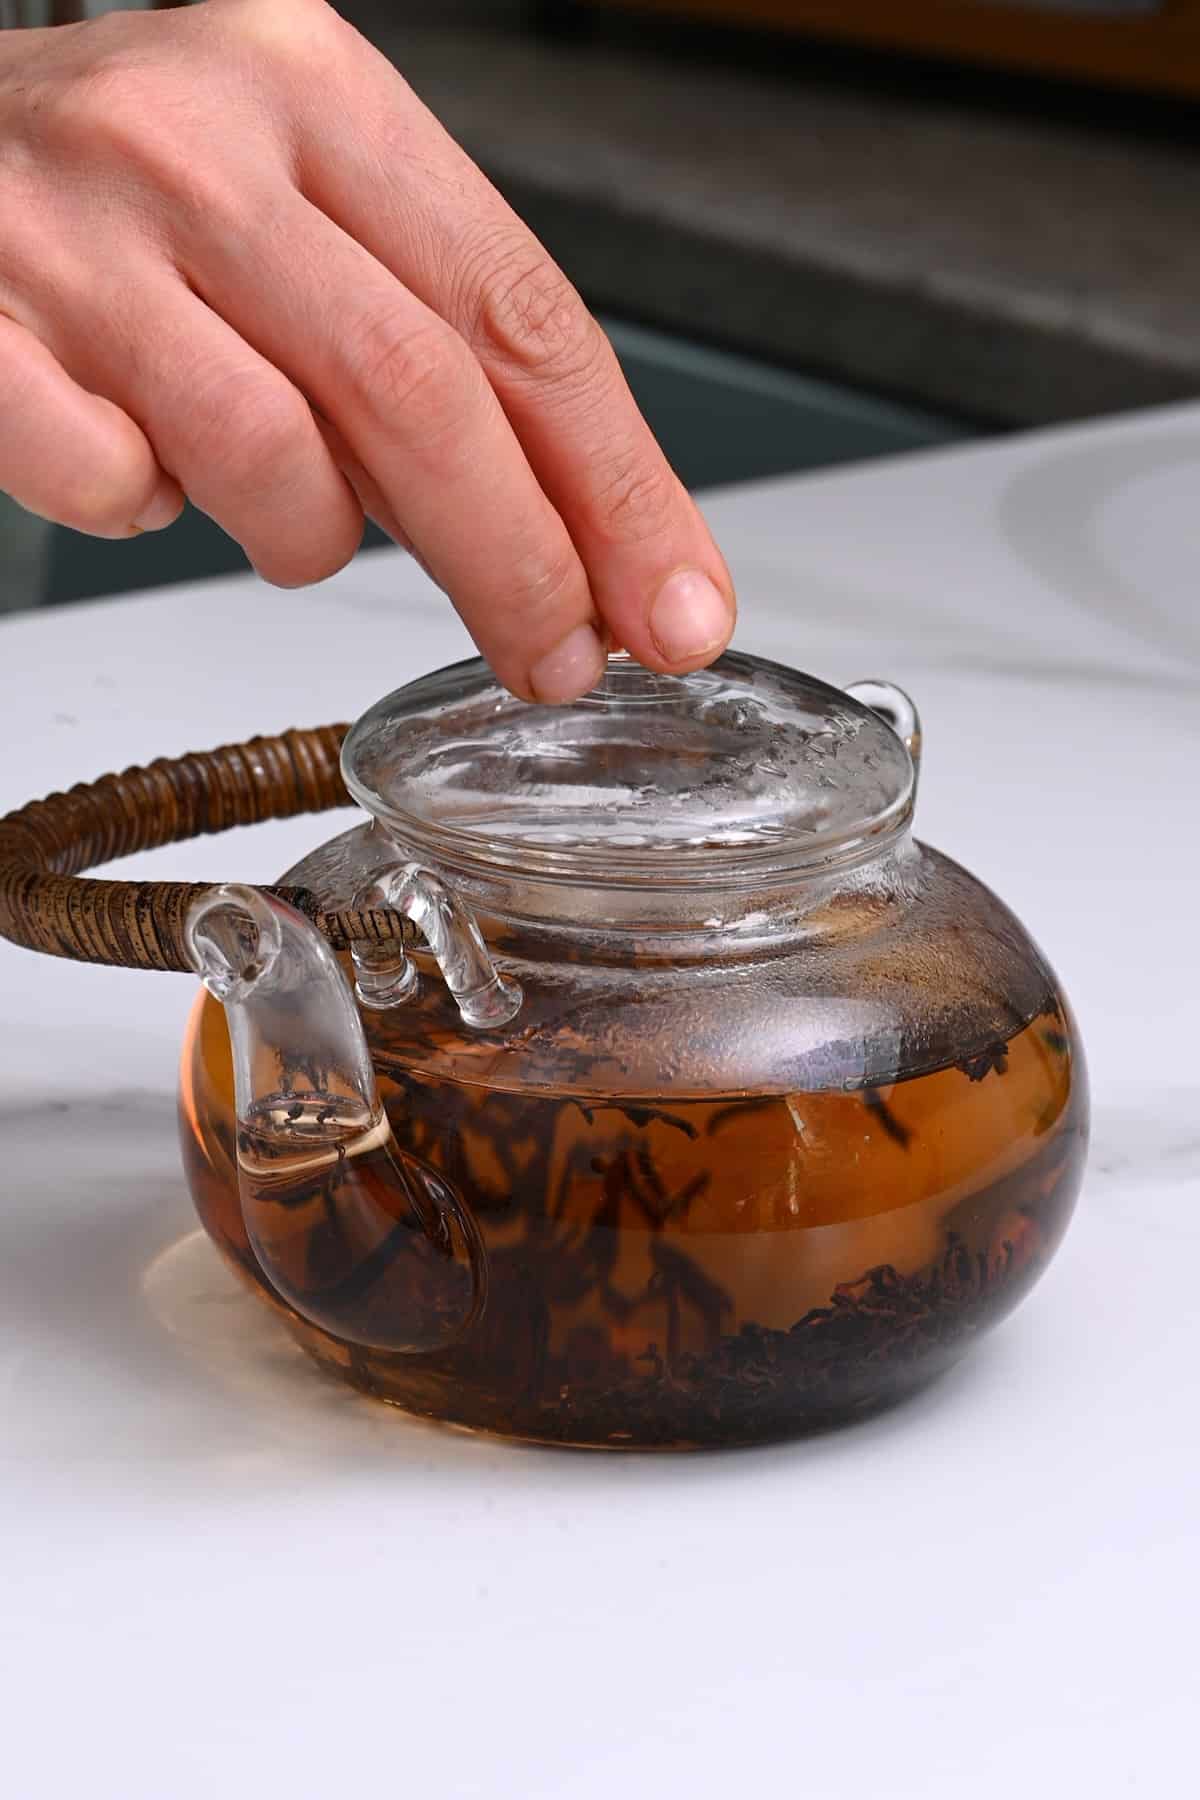 Steeping black tea in a pot